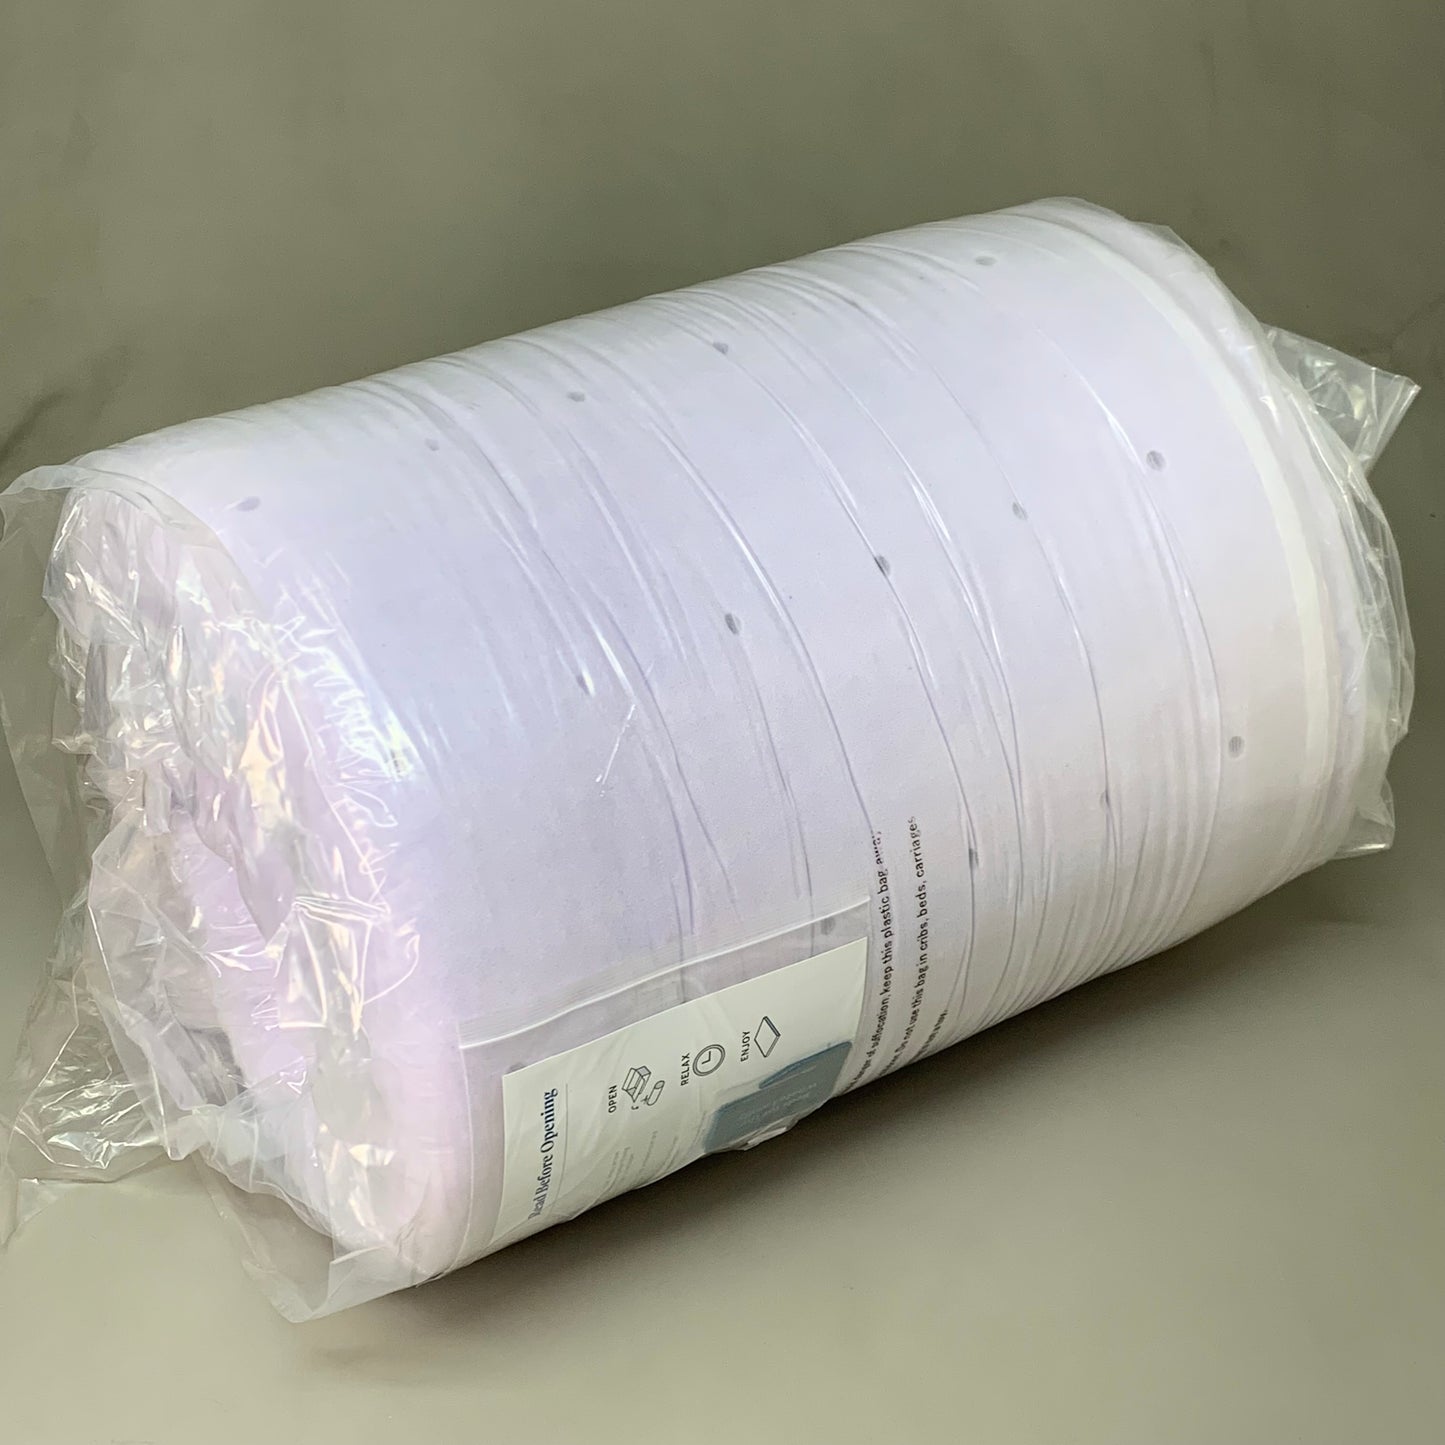 LUCID 4" Lavender Infused Memory Foam Mattress Topper Cali-King LU40CK30VT New